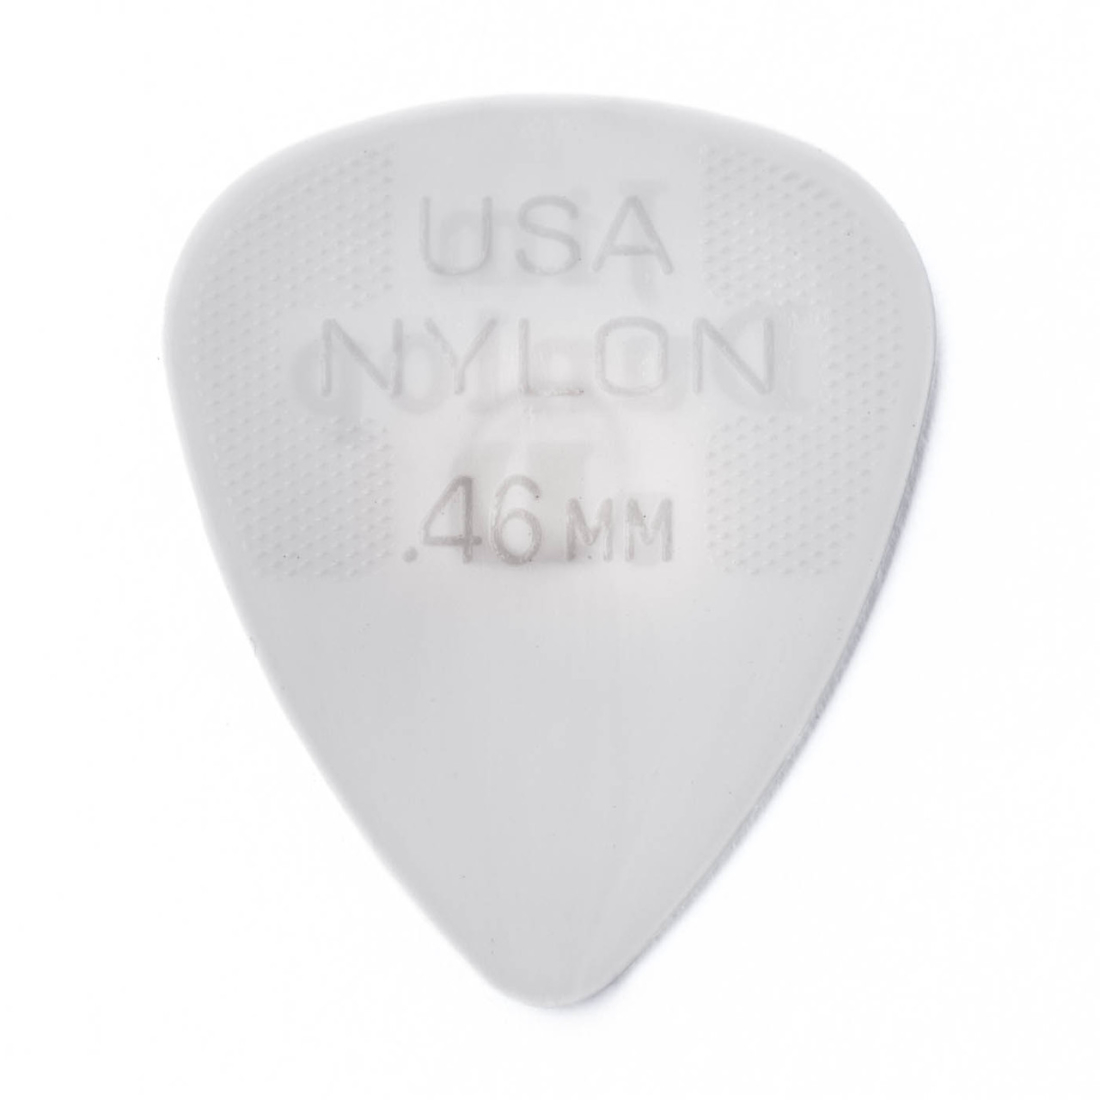 Nylon Player Pack (72 Pack) - 46mm